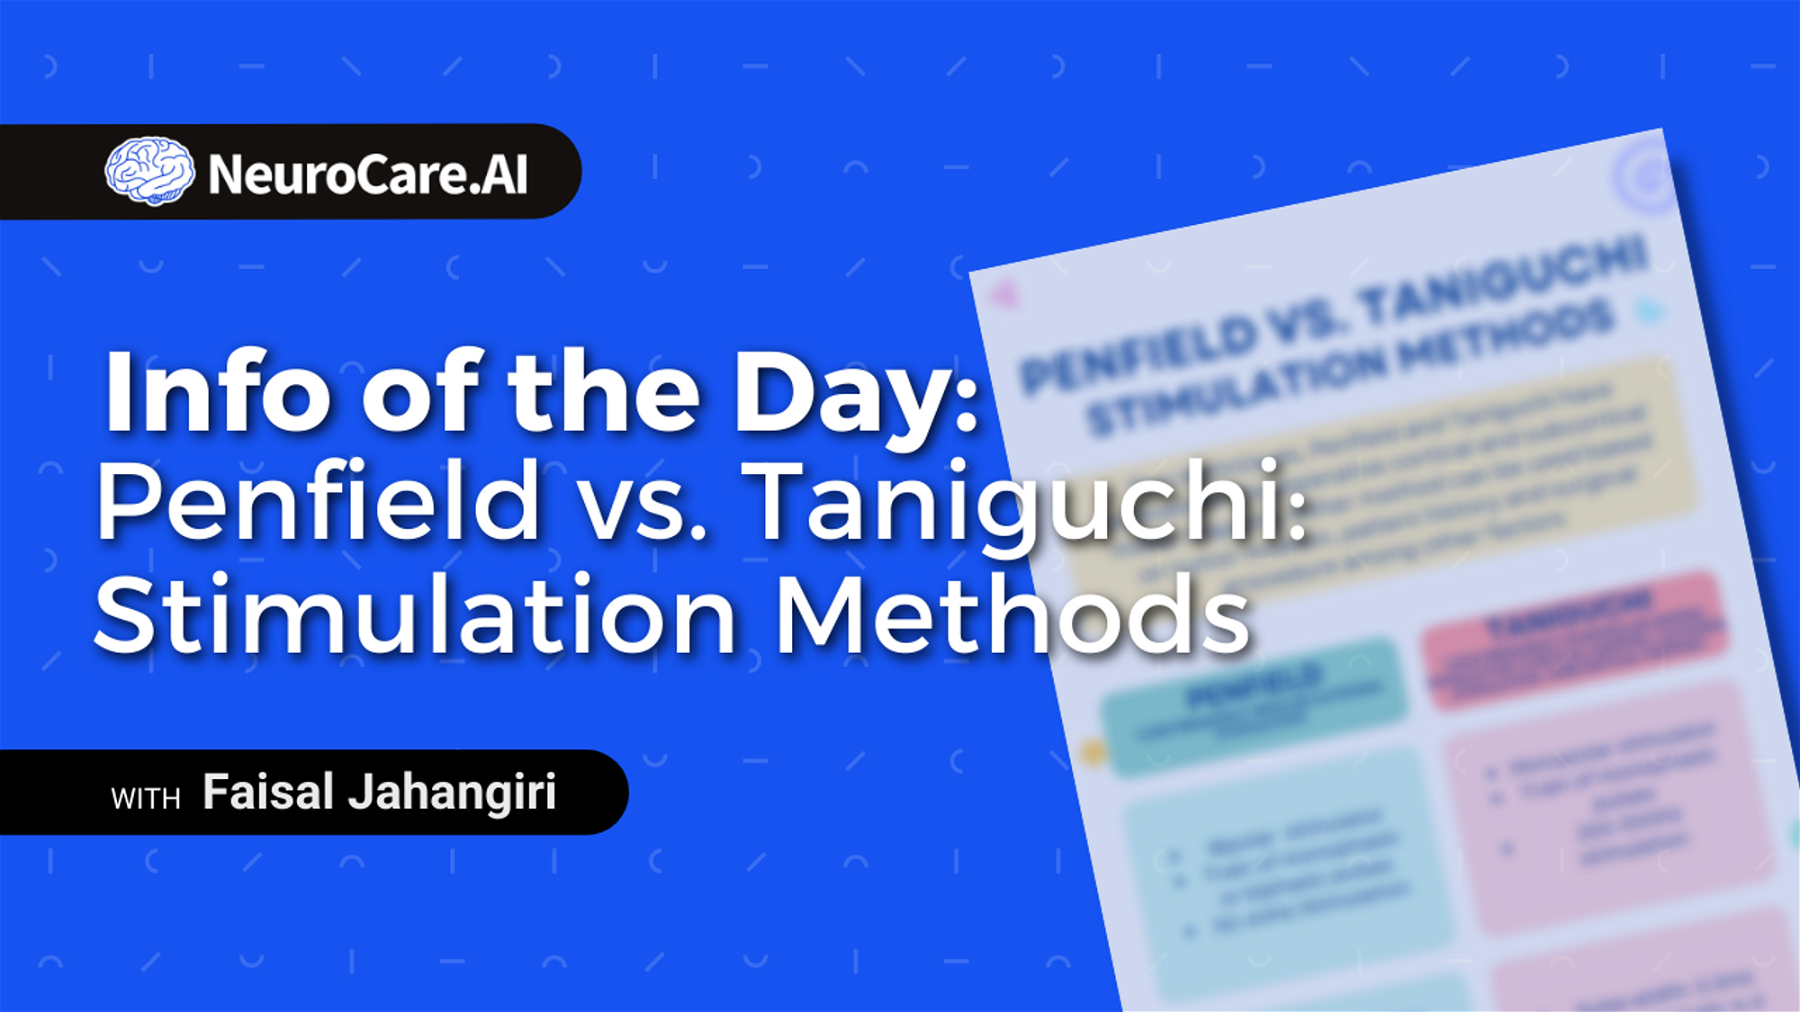 Info of the Day: "Penfield vs. Taniguchi: Stimulation Methods"